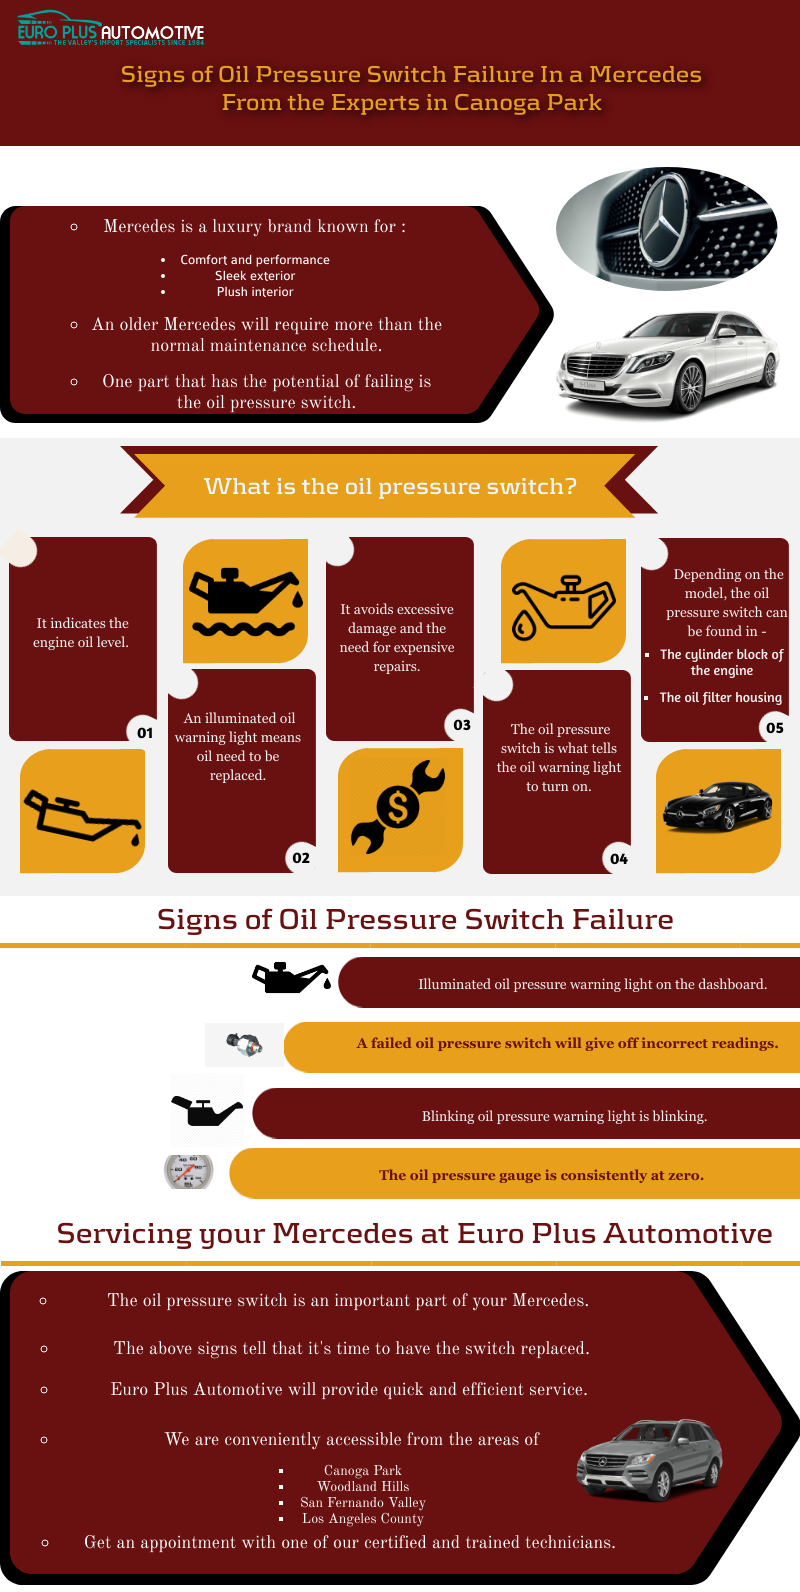 Mercedes Oil Pressure Switch Failure Signs